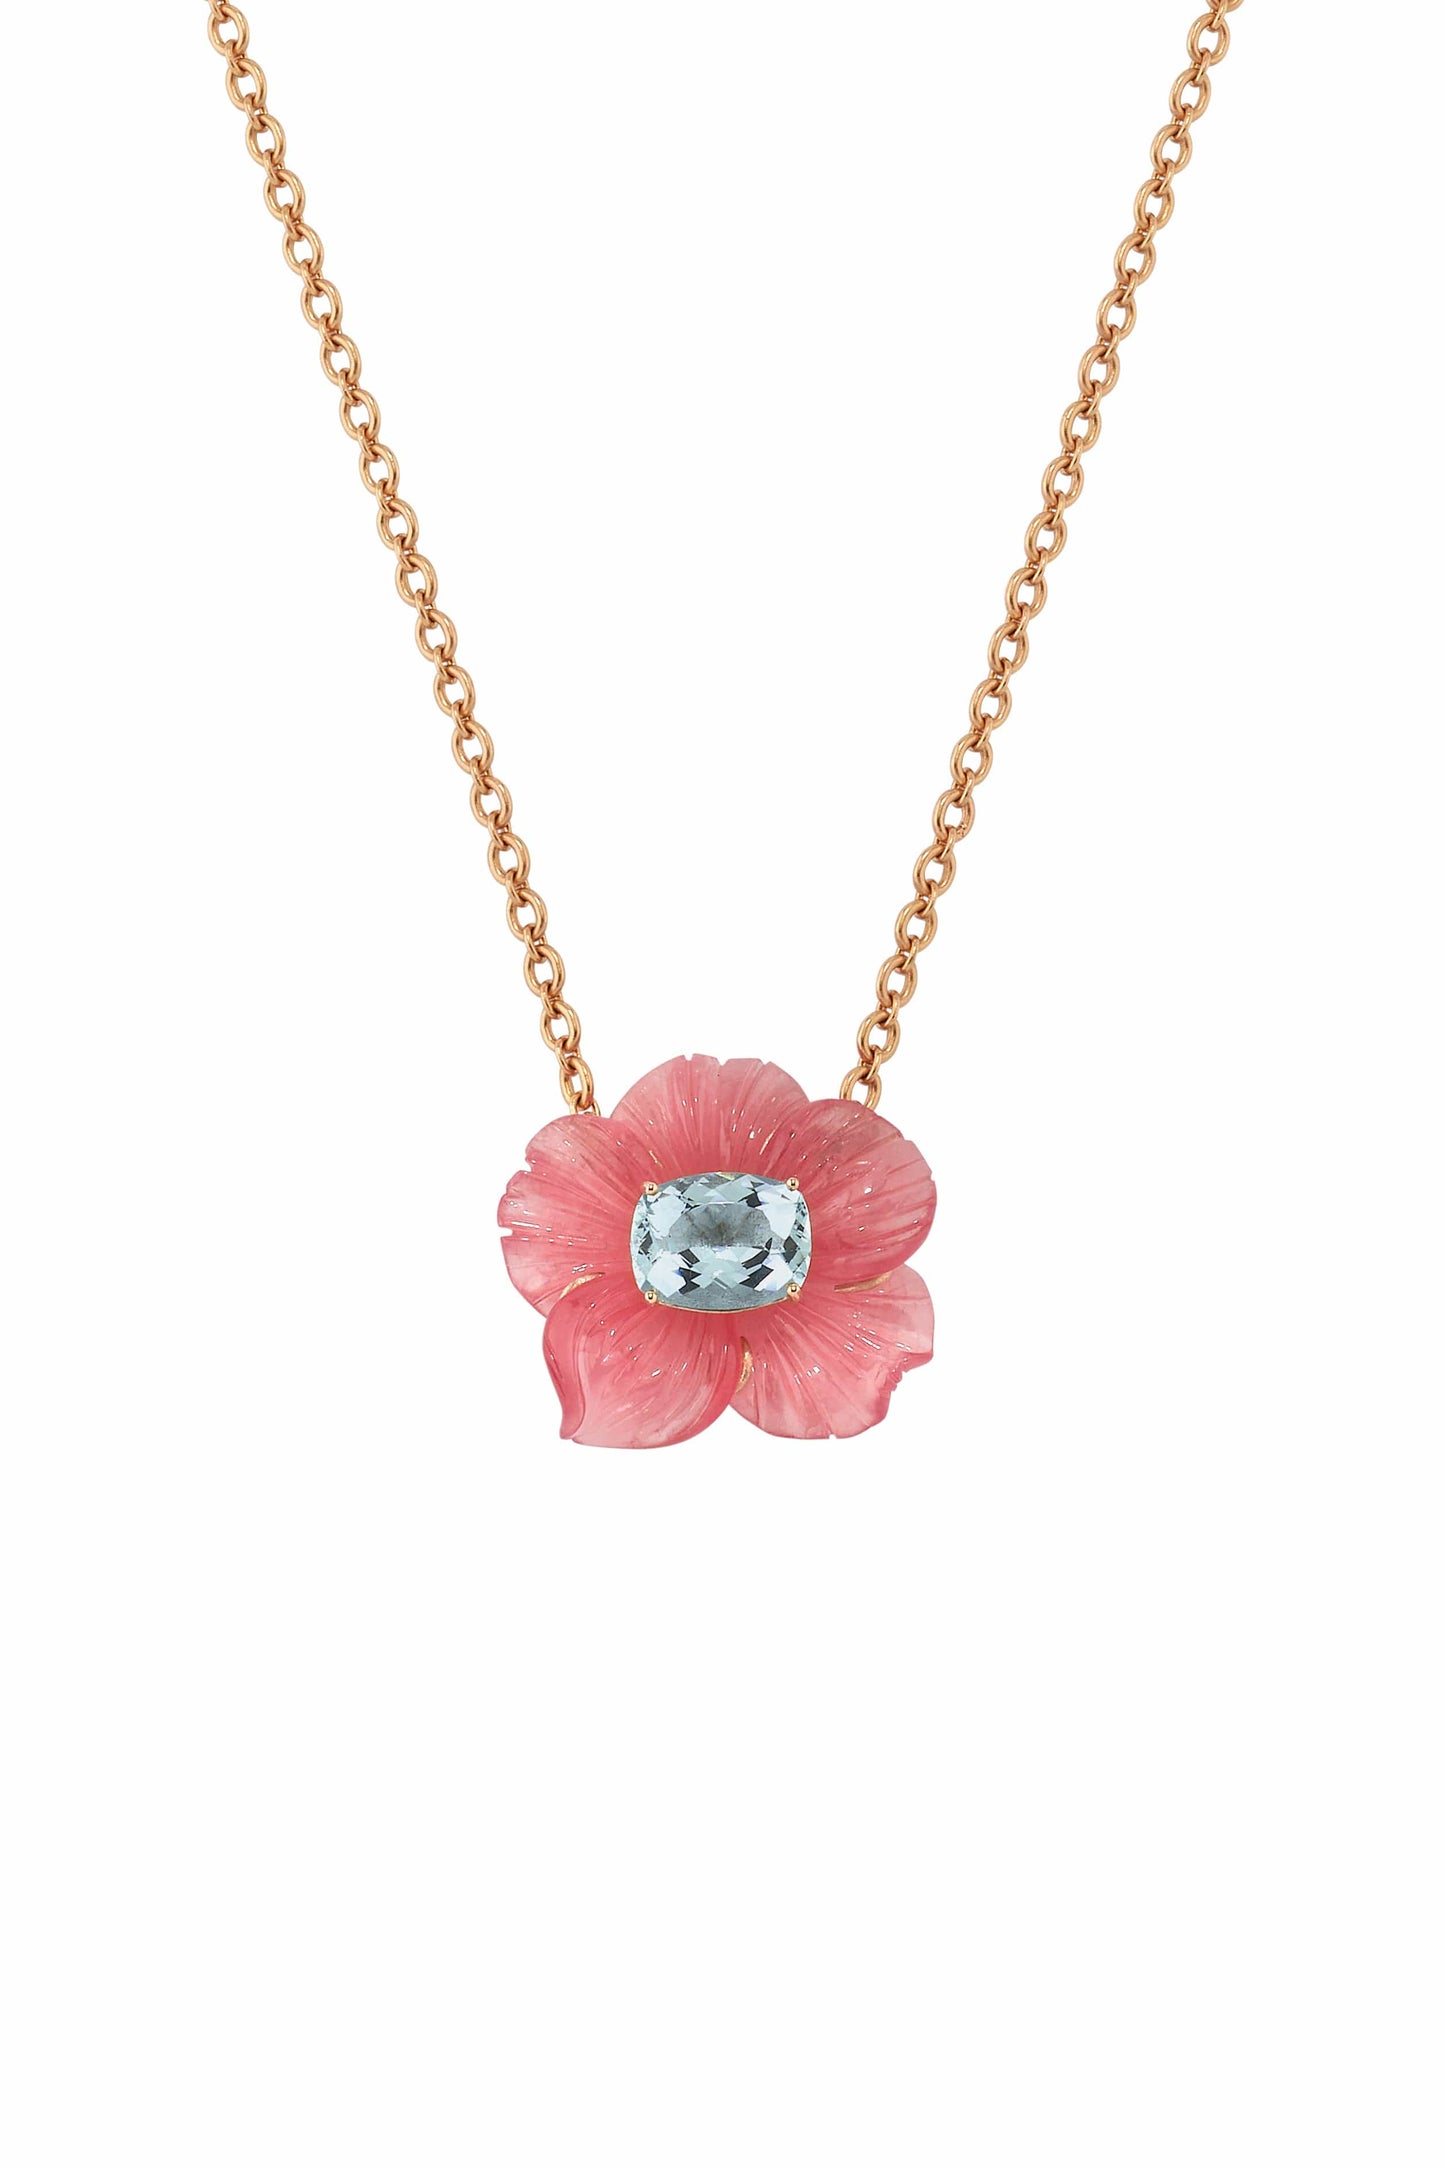 IRENE NEUWIRTH JEWELRY-Pink Tourmaline and Aquamarine Tropical Flower Necklace-ROSE GOLD